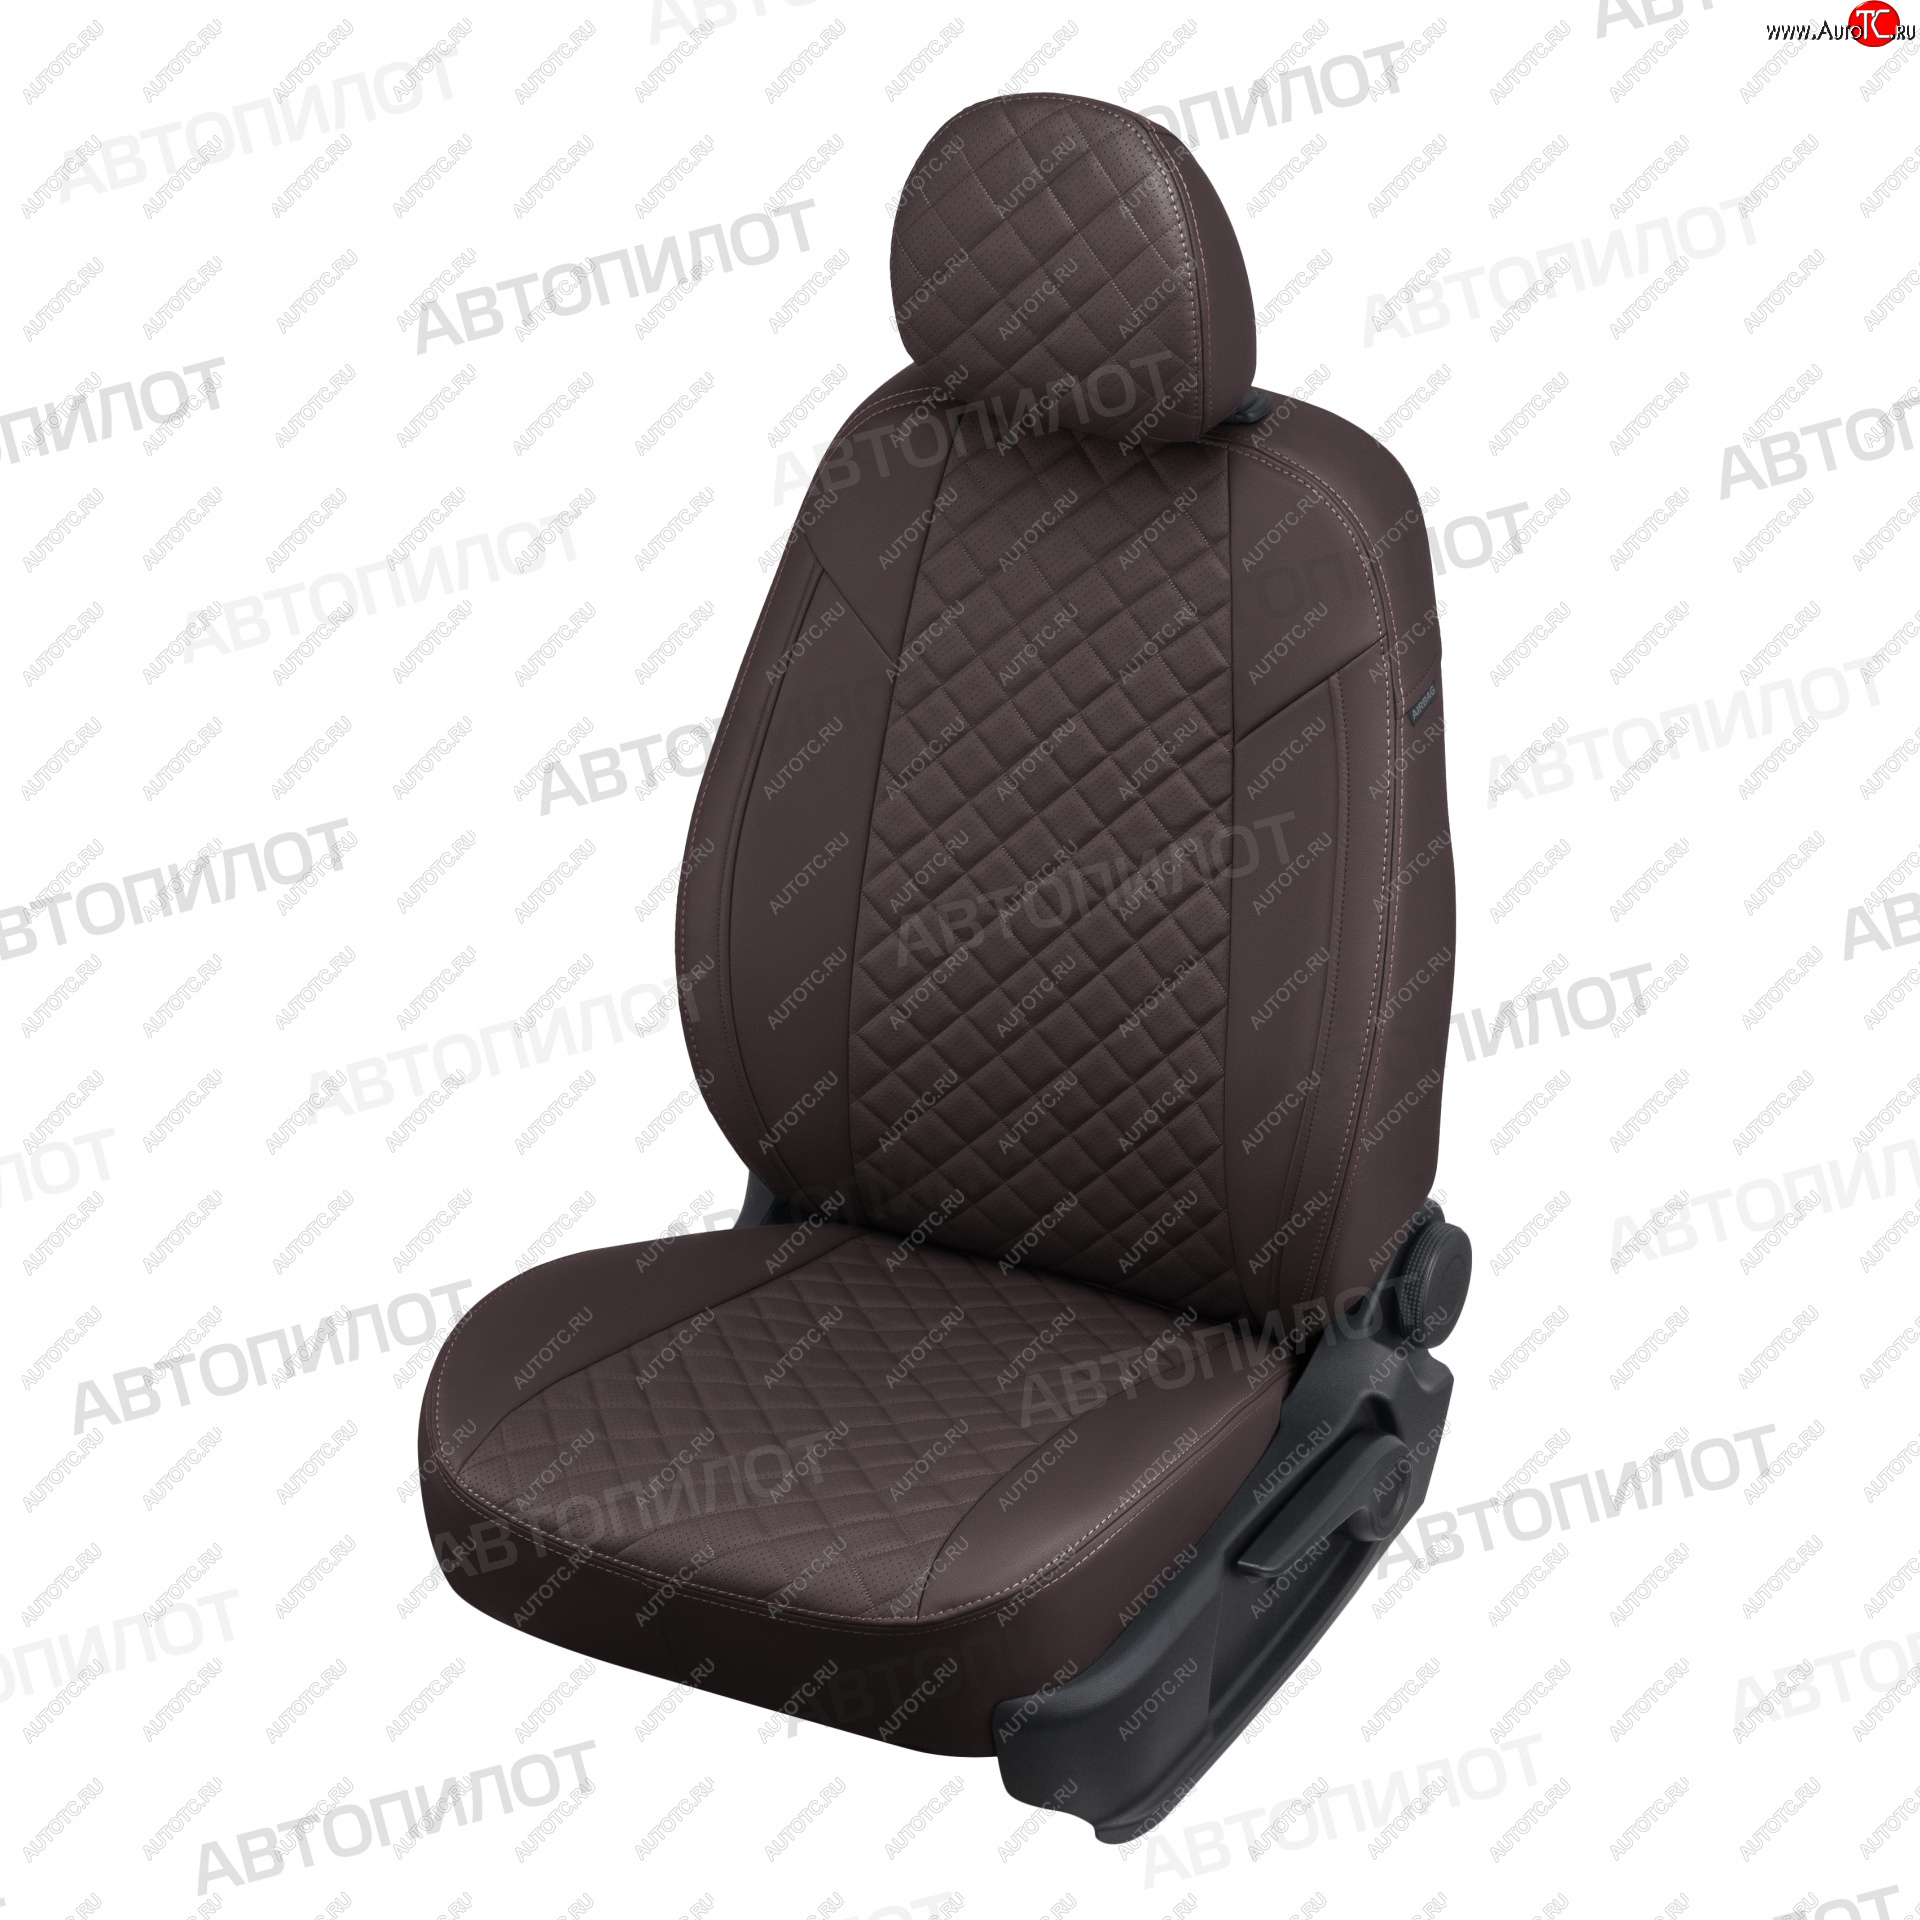 8 699 р. Чехлы сидений (экокожа, 3 места) Автопилот Ромб  Hyundai HD-72 - HD78 (шоколад)